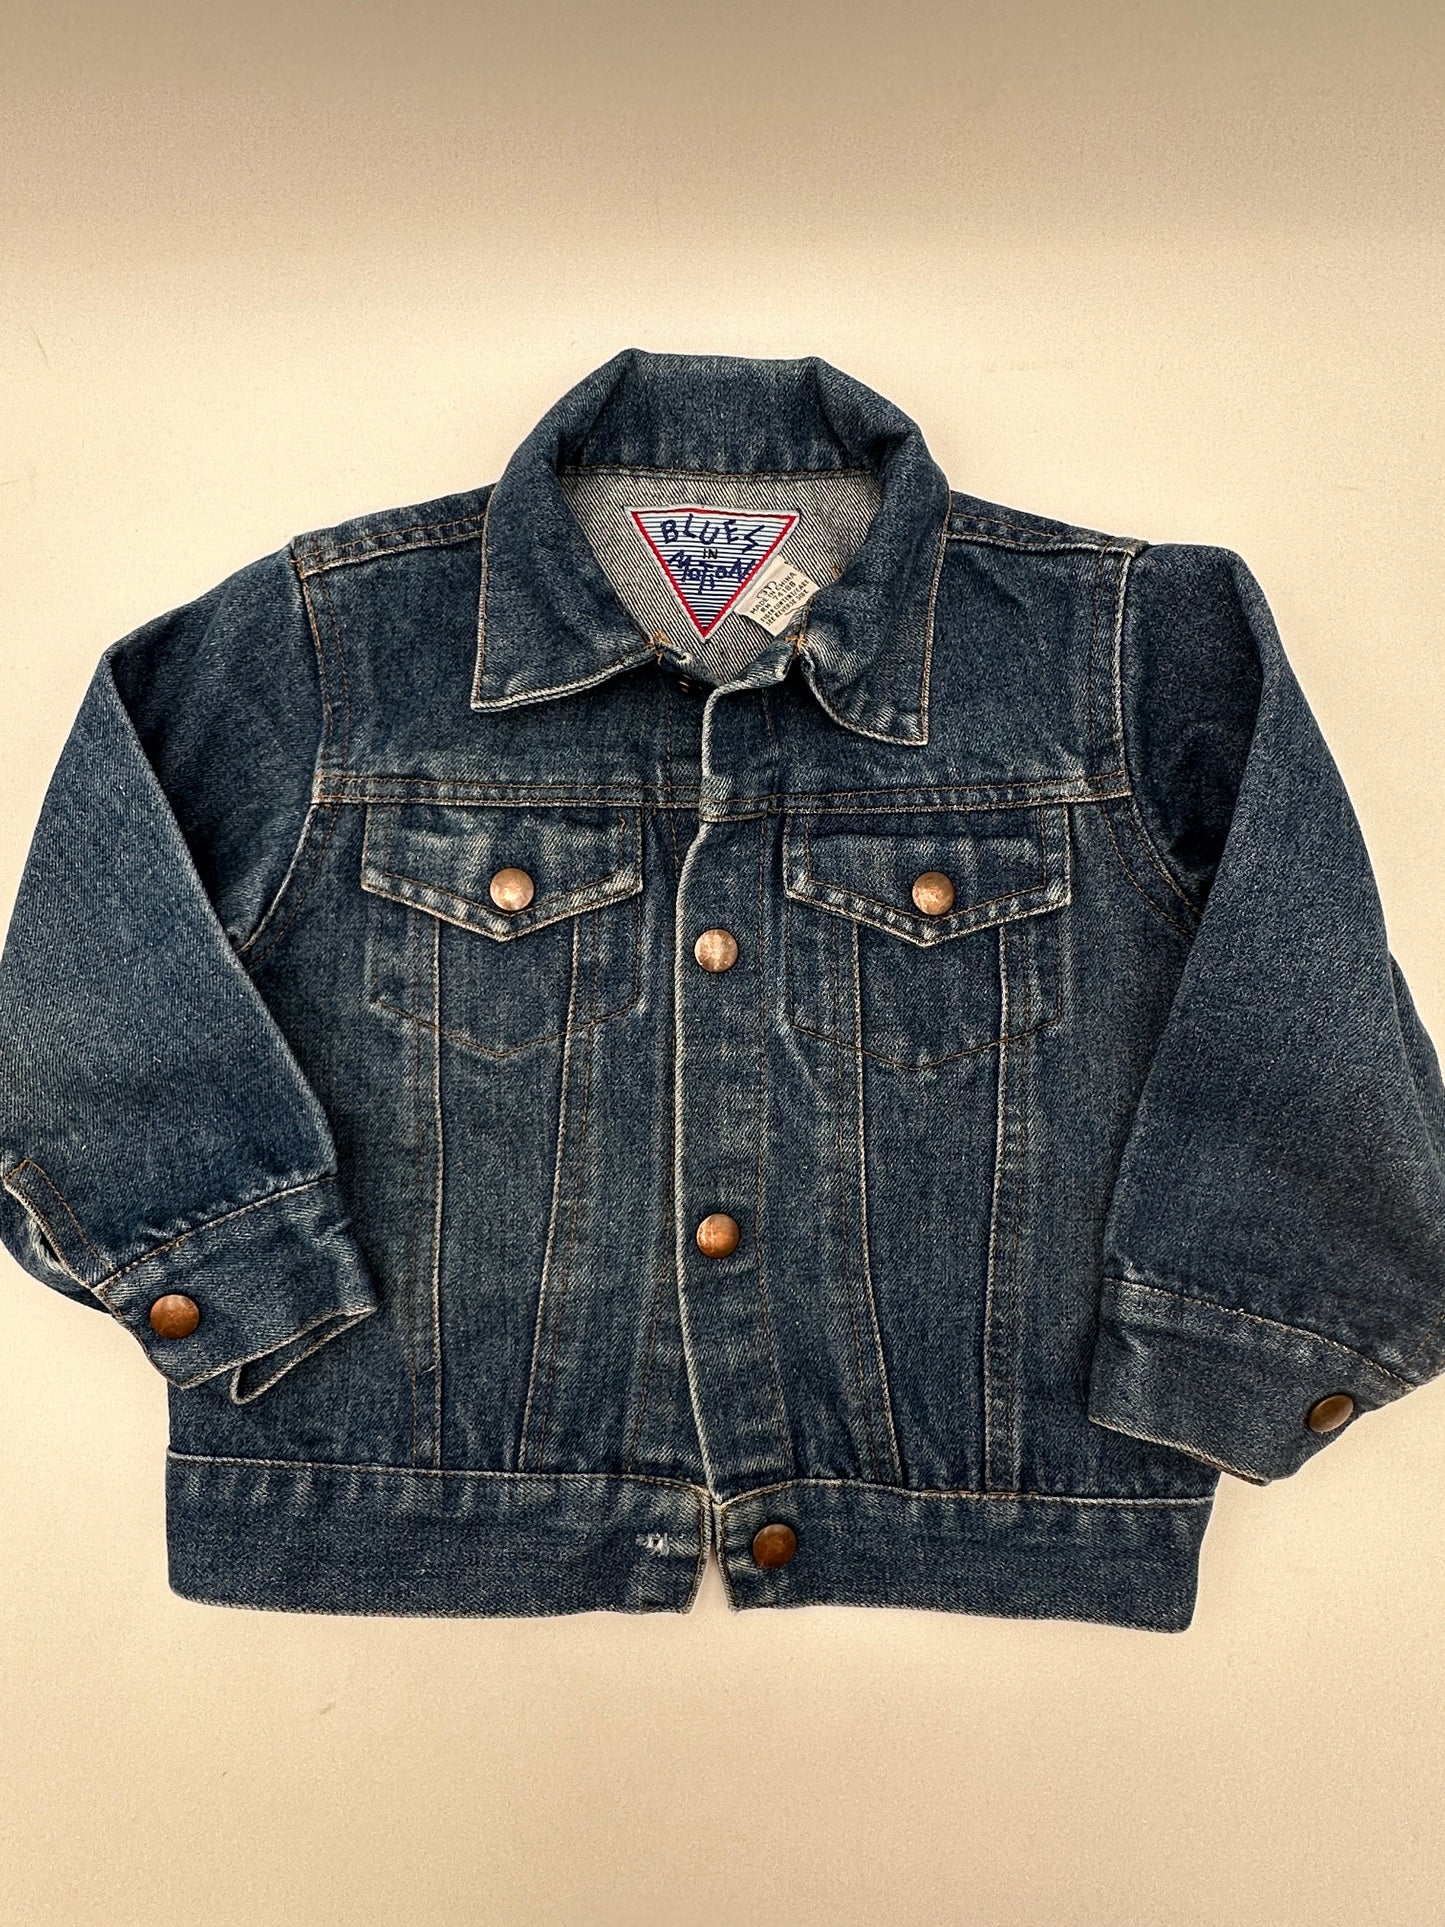 Blues in Motion Unisex Toddler Size 3T Blue Medium Wash Vintage Denim Jacket